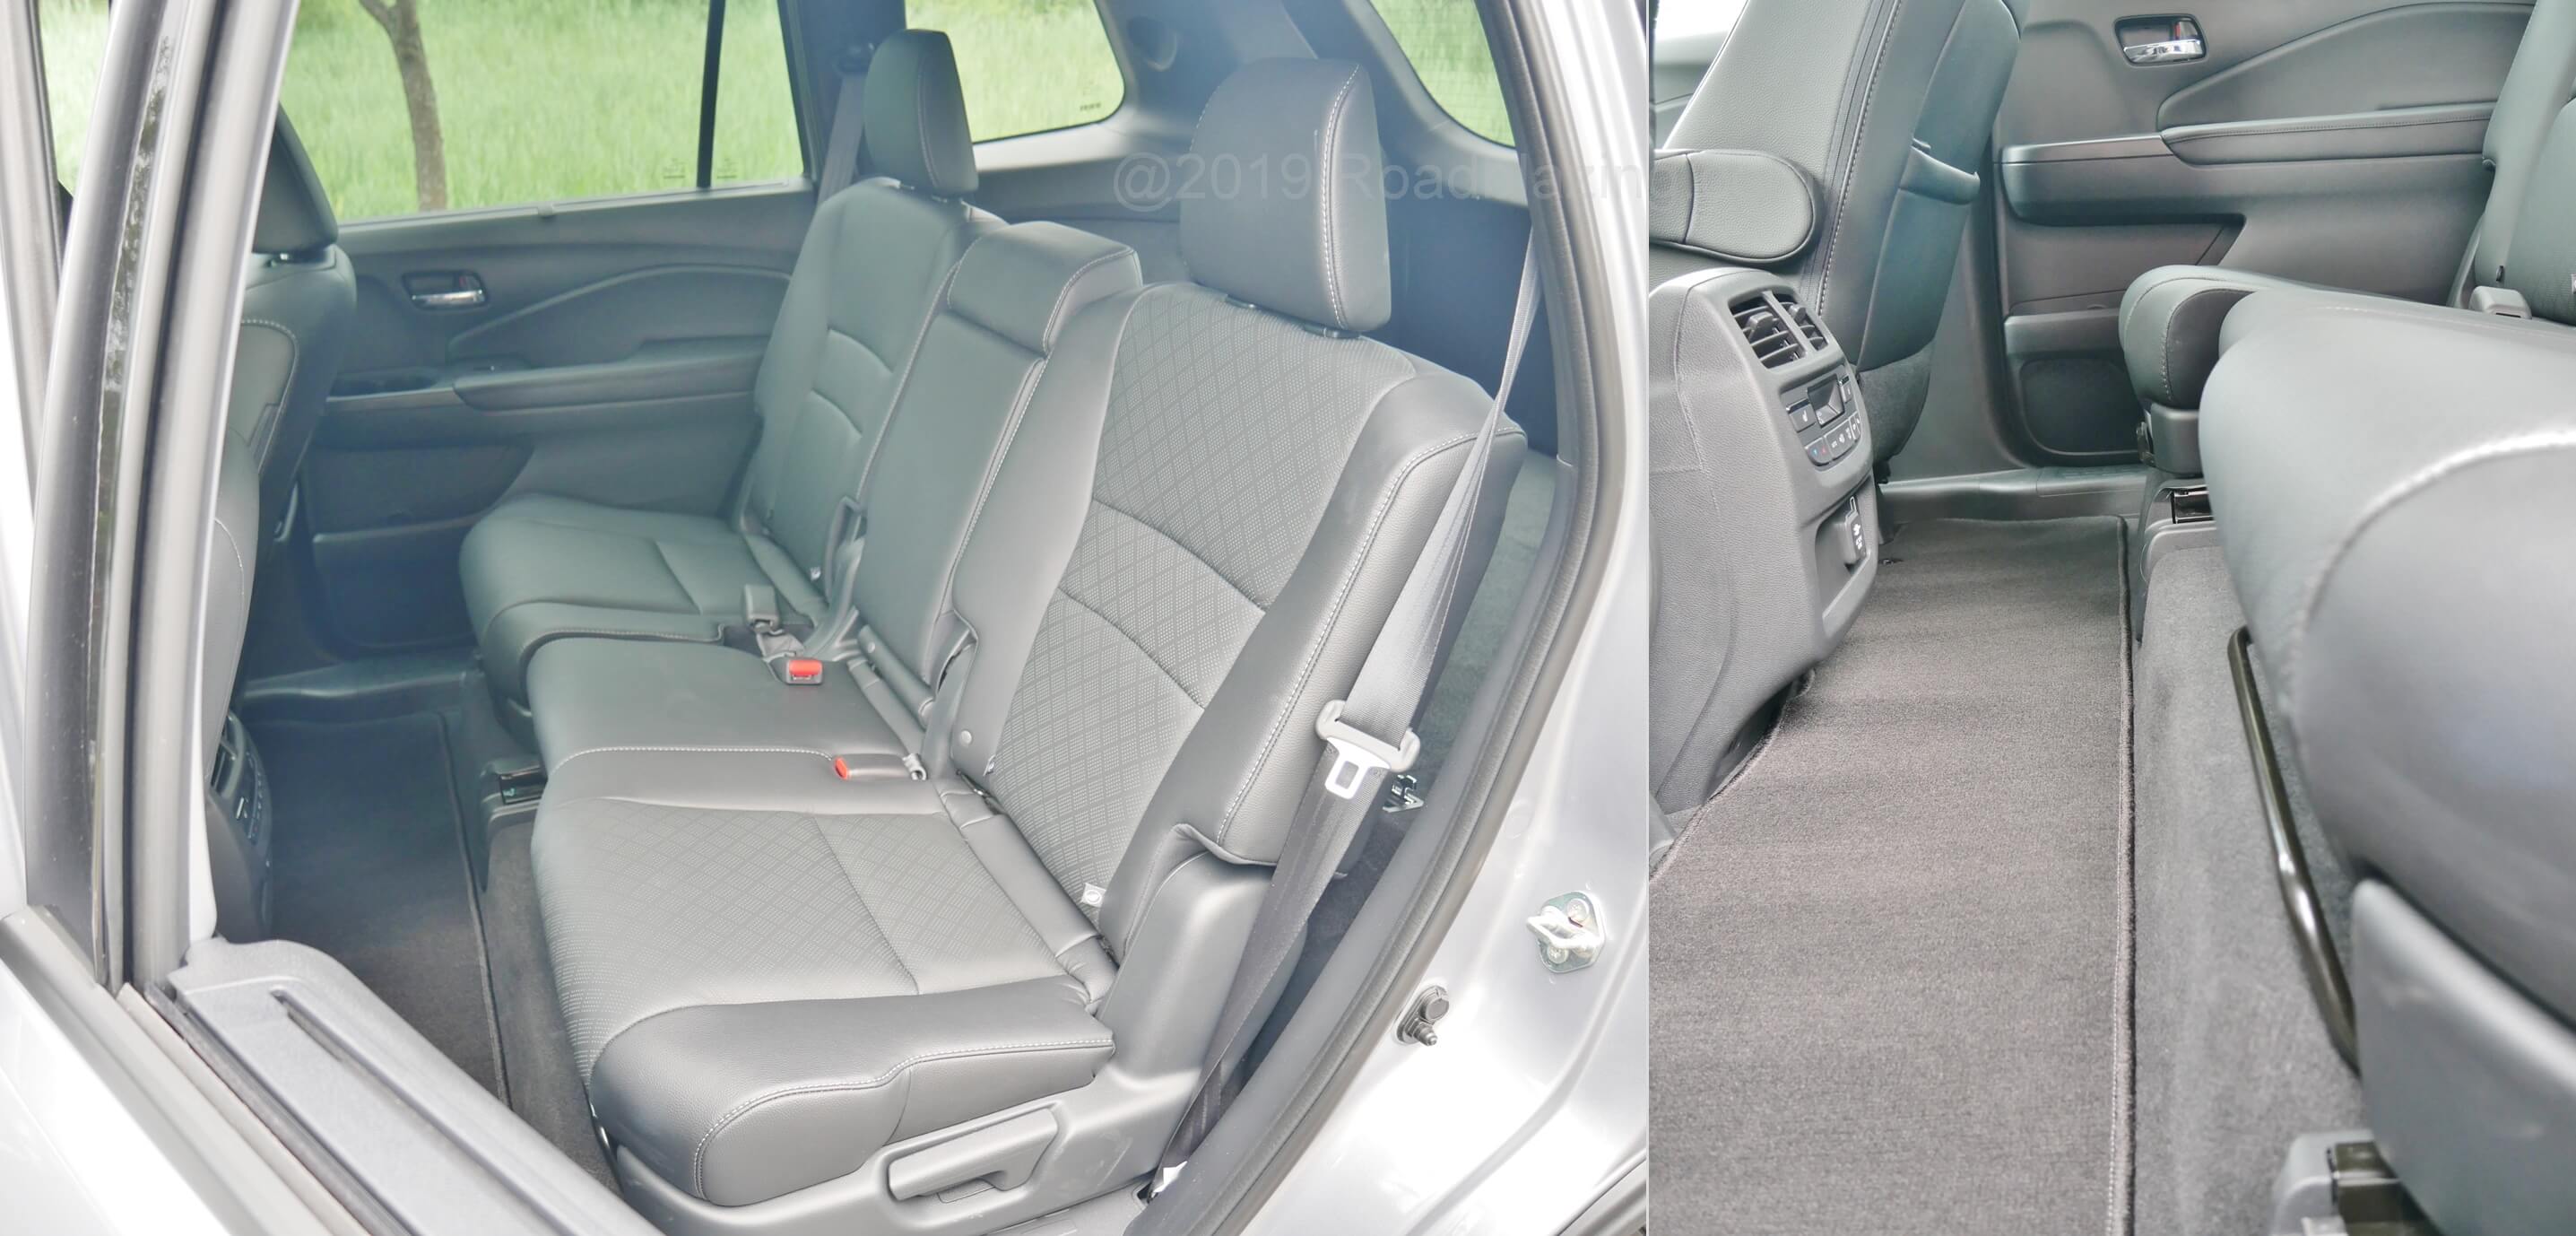 2019 Honda Passport Elite AWD: Row 2 60/40% split sliding, tilting, back folding seating, heated outboard